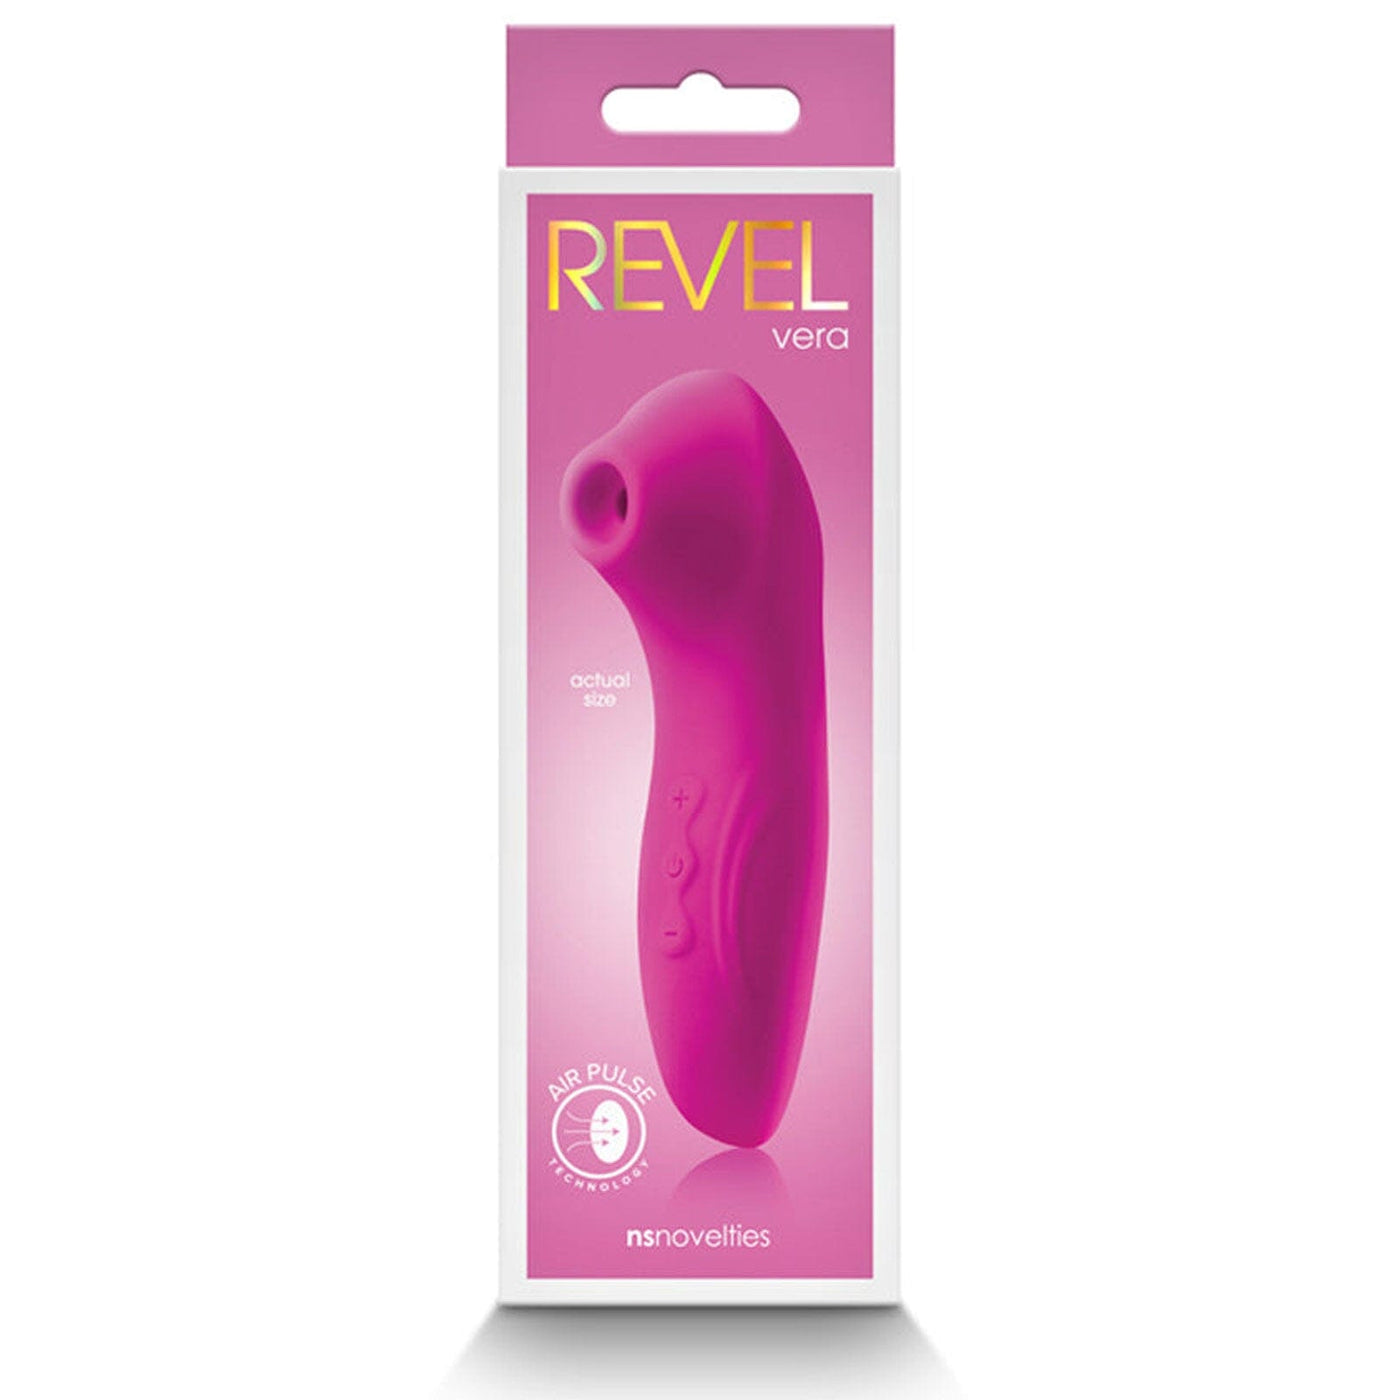 Revel – Vera Air Pulse Clitoral Stimulator